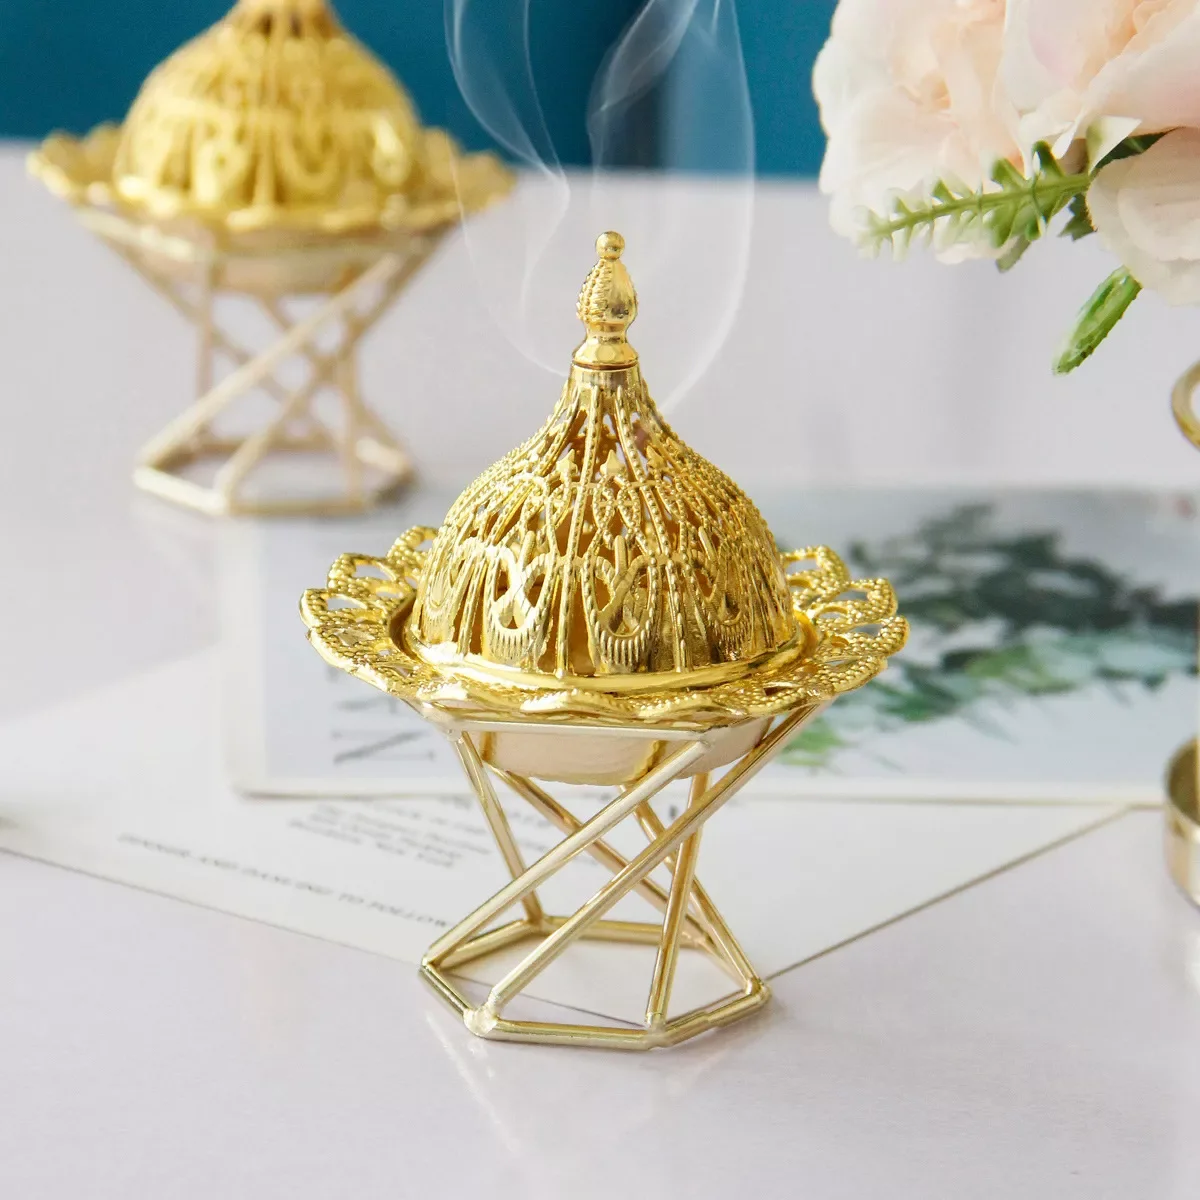 

9CM Gold Metal Incense Burner Mini Small Handheld Aroma Burner Arabian Style Home Essentials Home Decorations